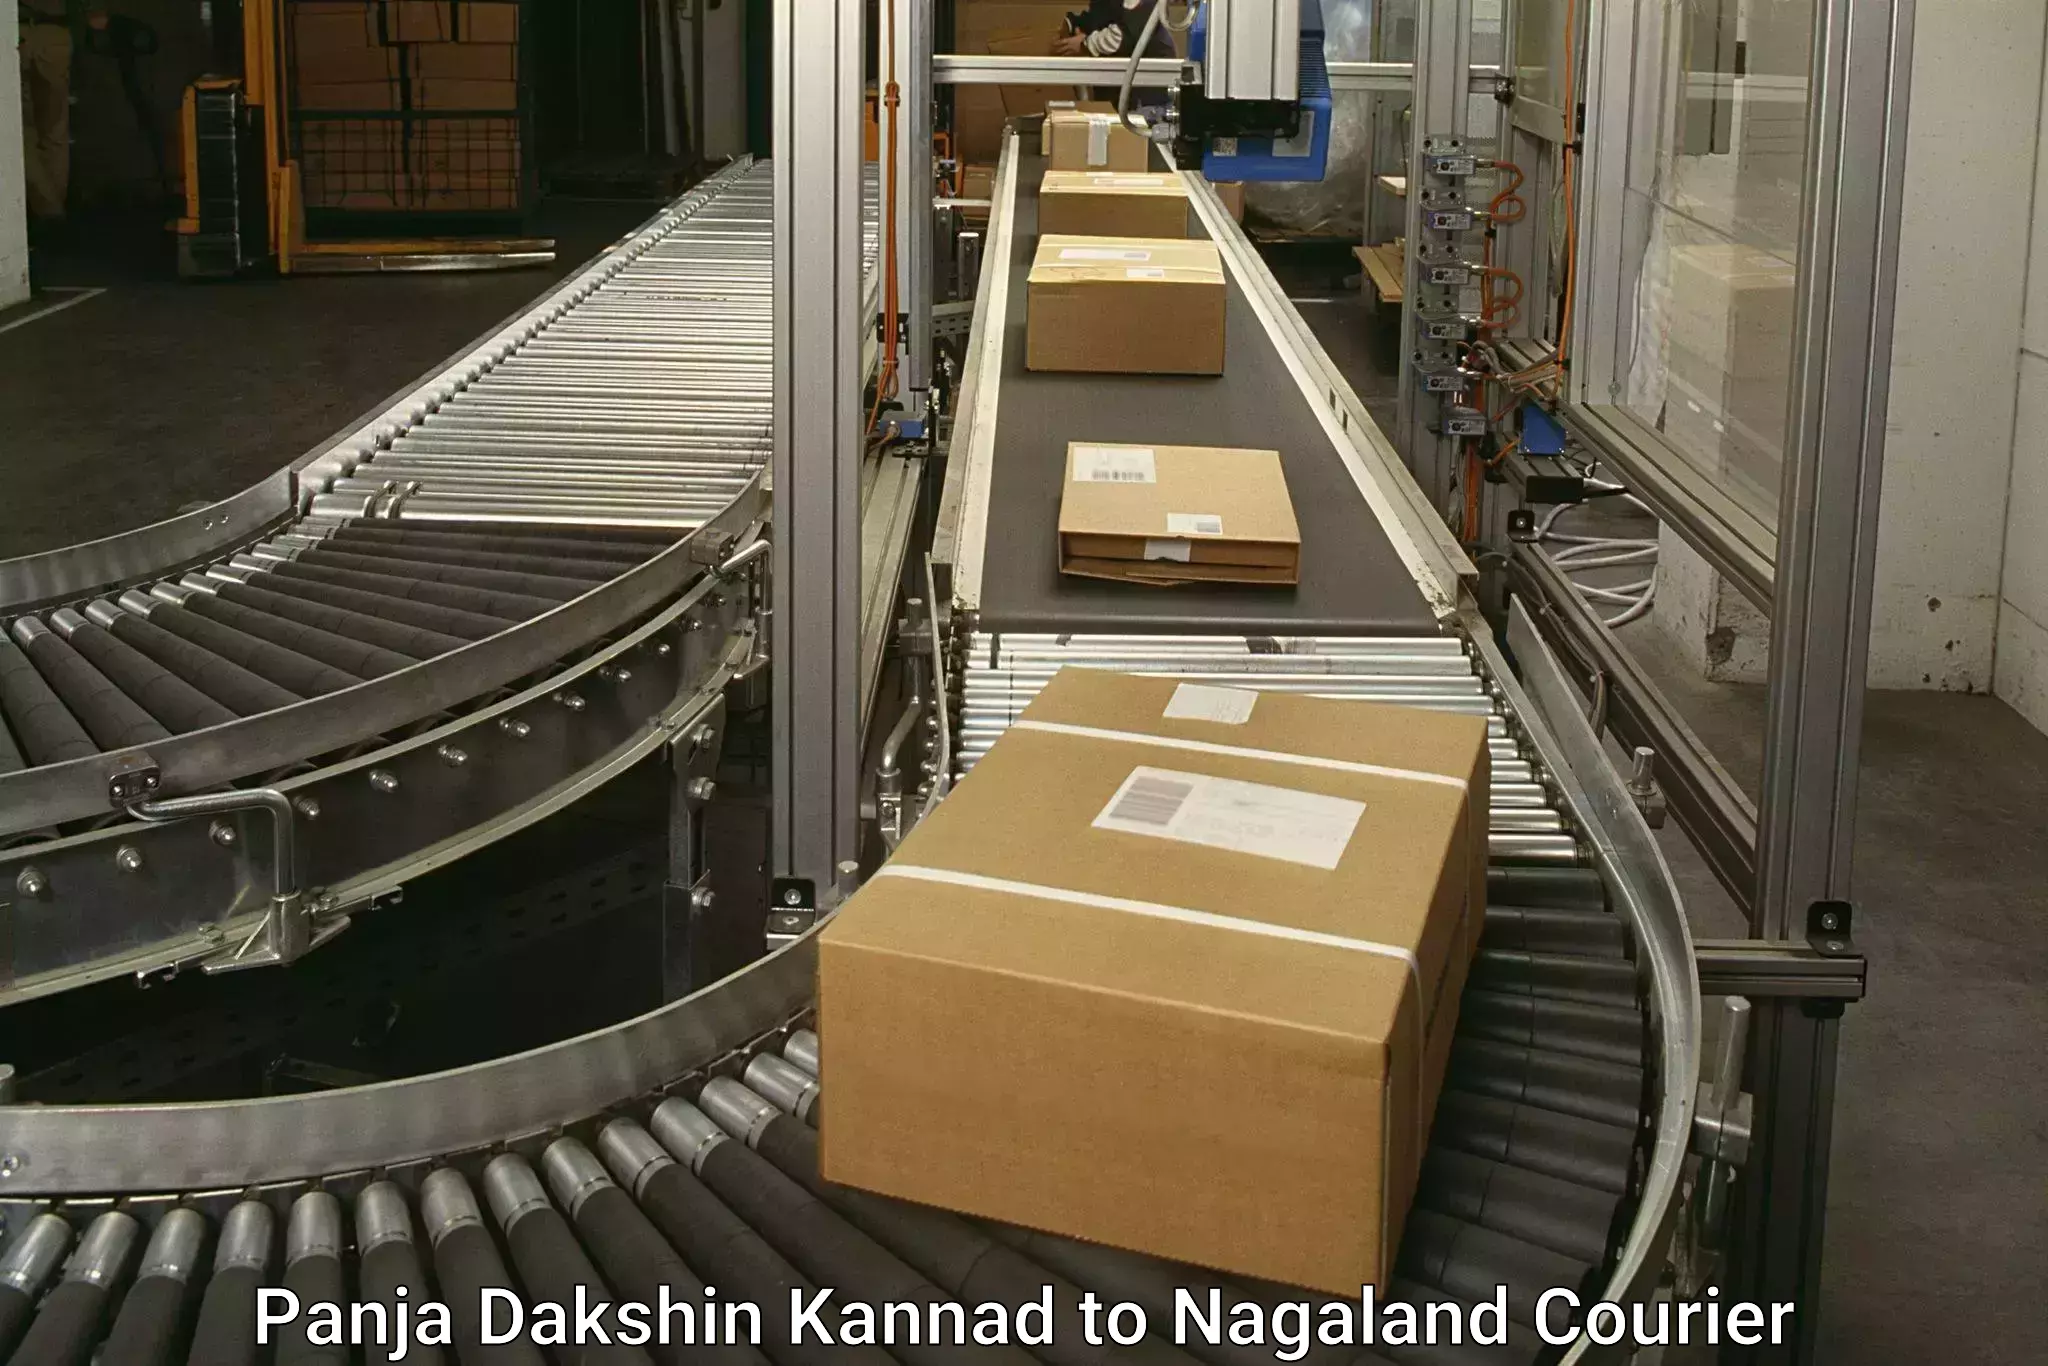 24/7 courier service Panja Dakshin Kannad to Nagaland